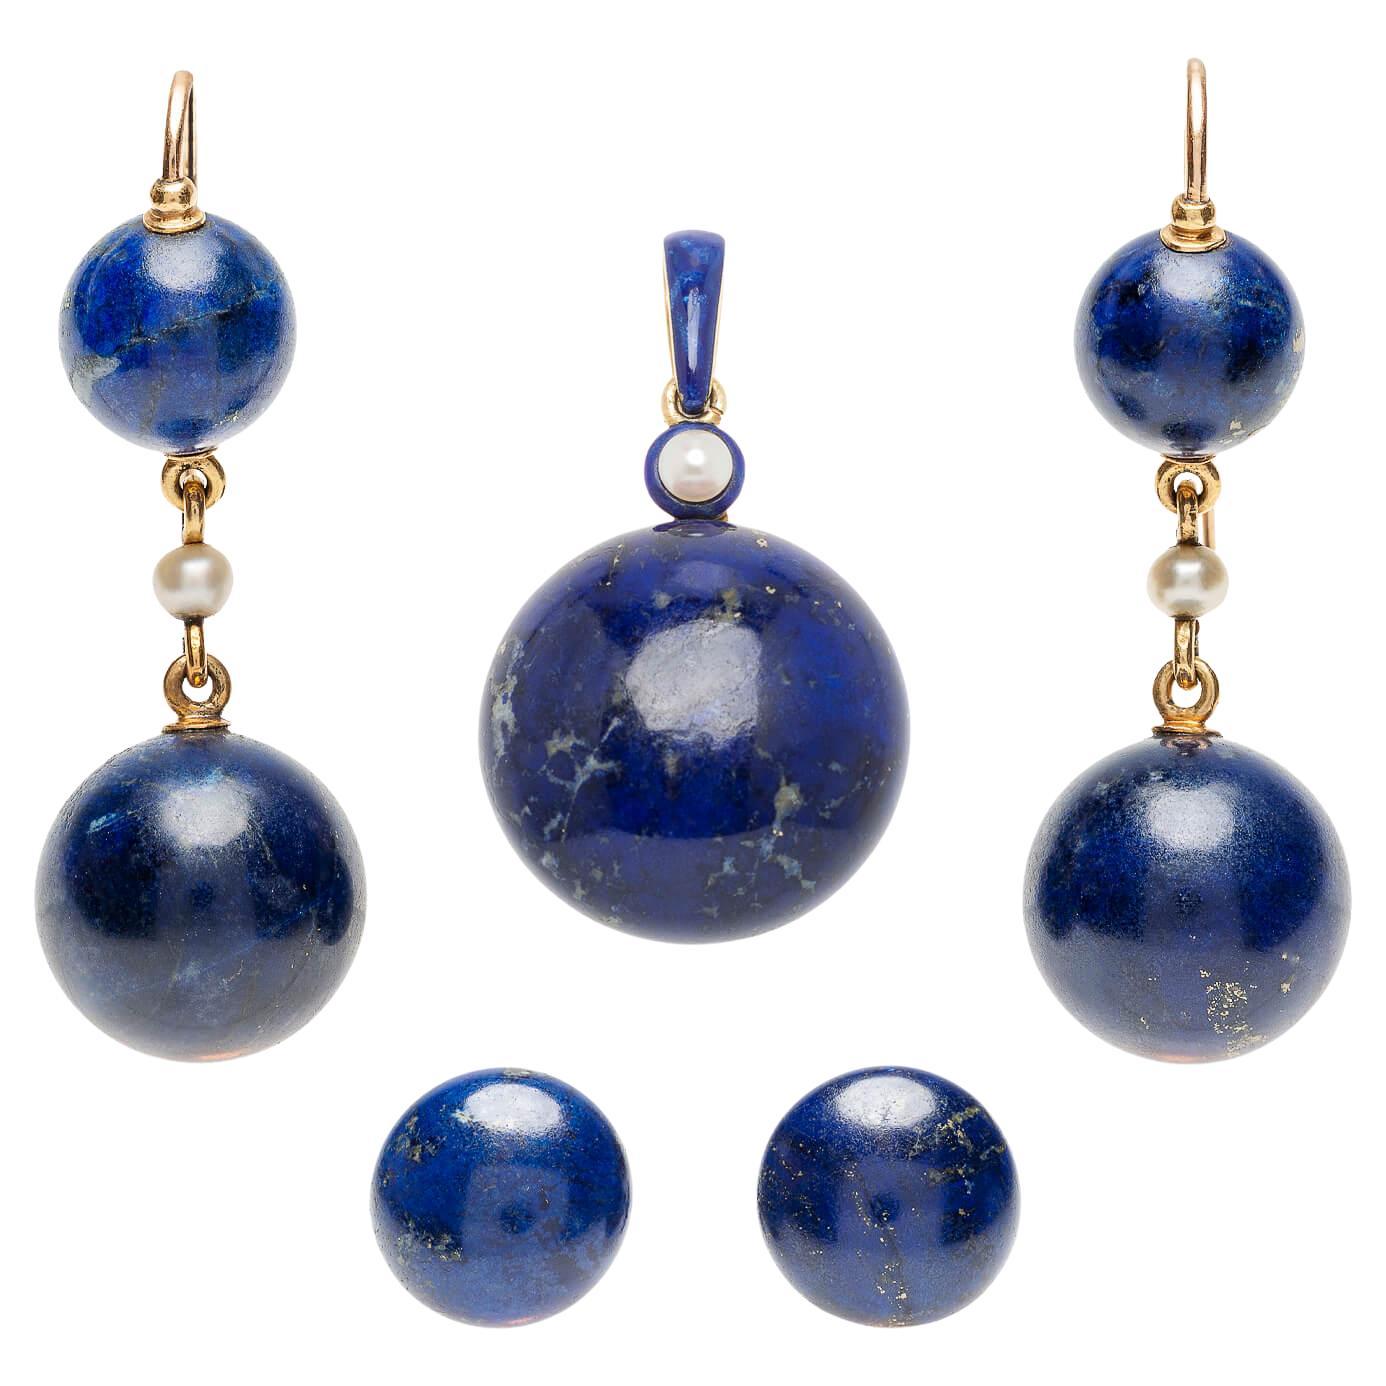 Victorian Pearl, Enamel + Carved Lapis Lazuli Earrings, Pendant + Button Set